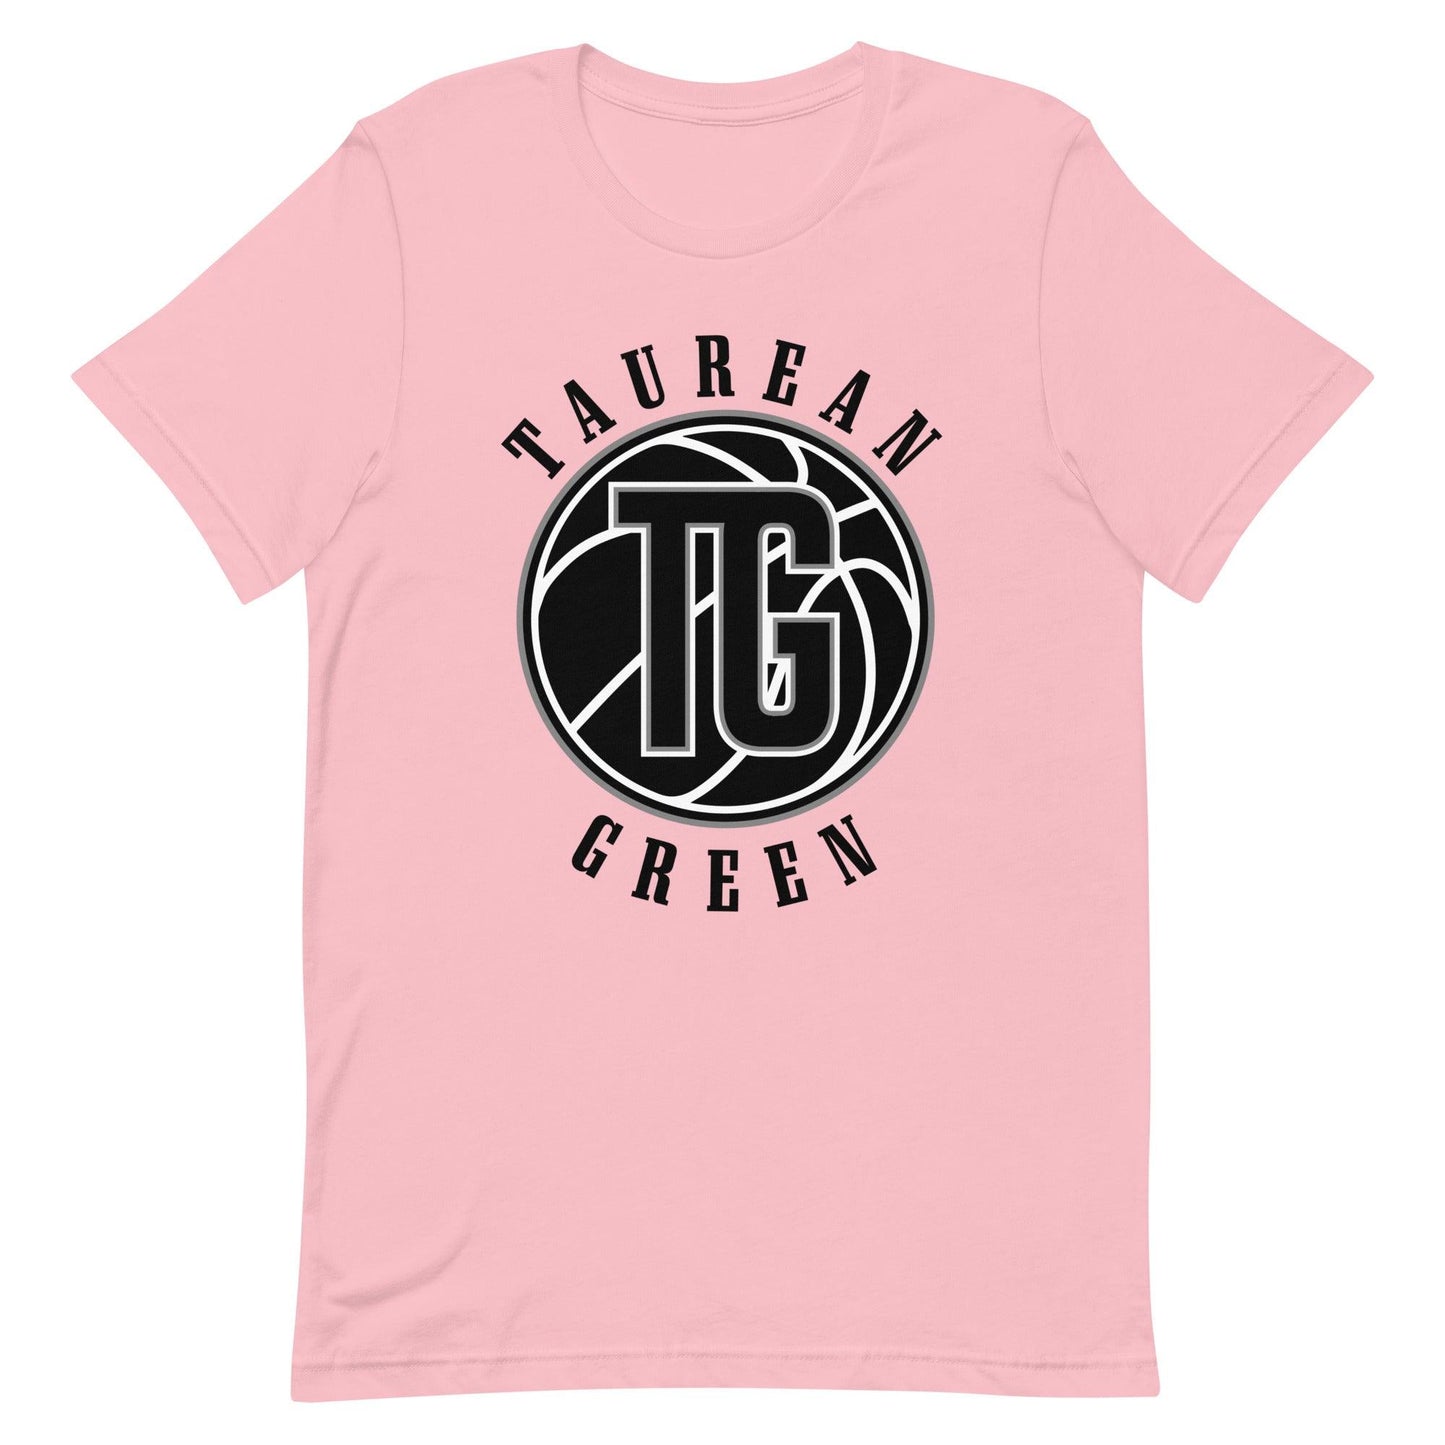 Taurean Green "Essential" t-shirt - Fan Arch